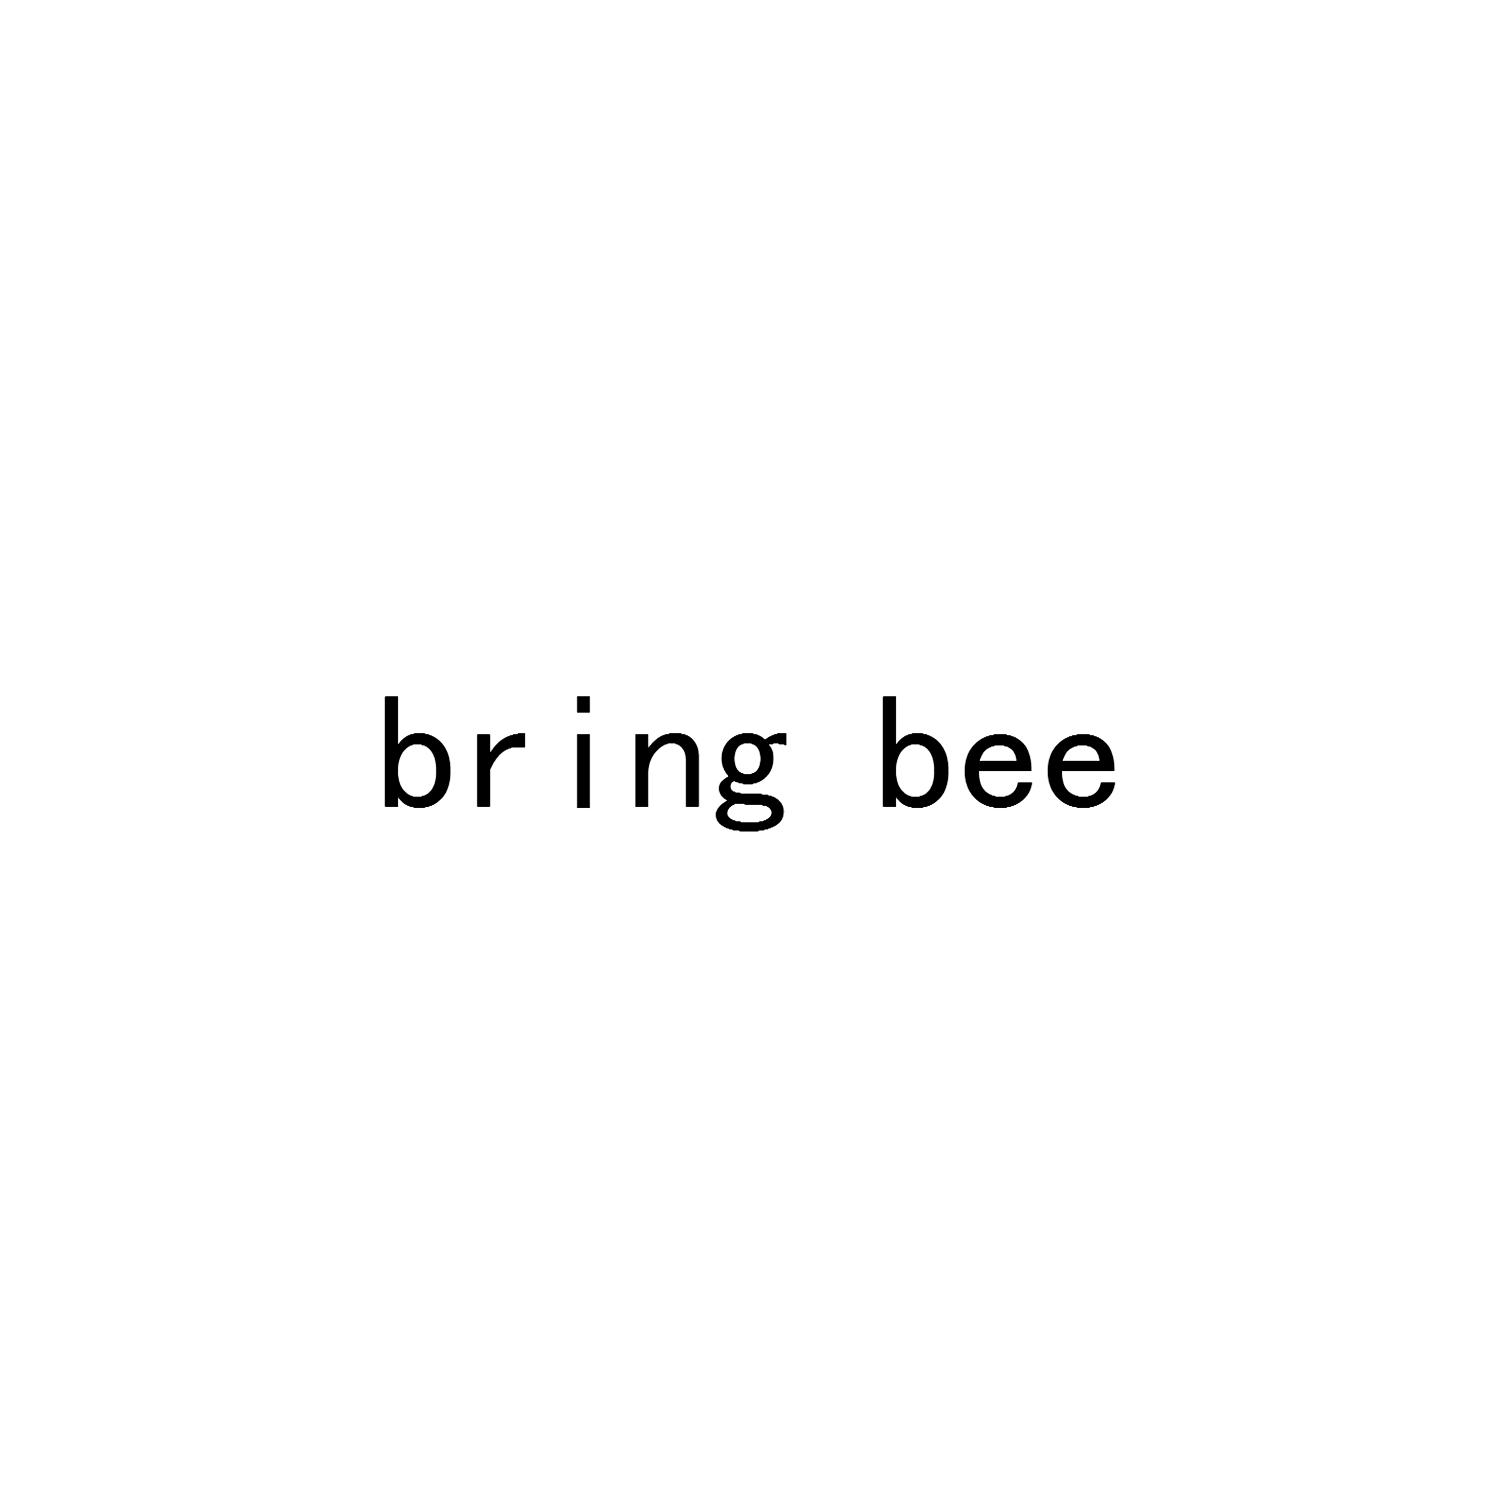 BRING BEE商标转让